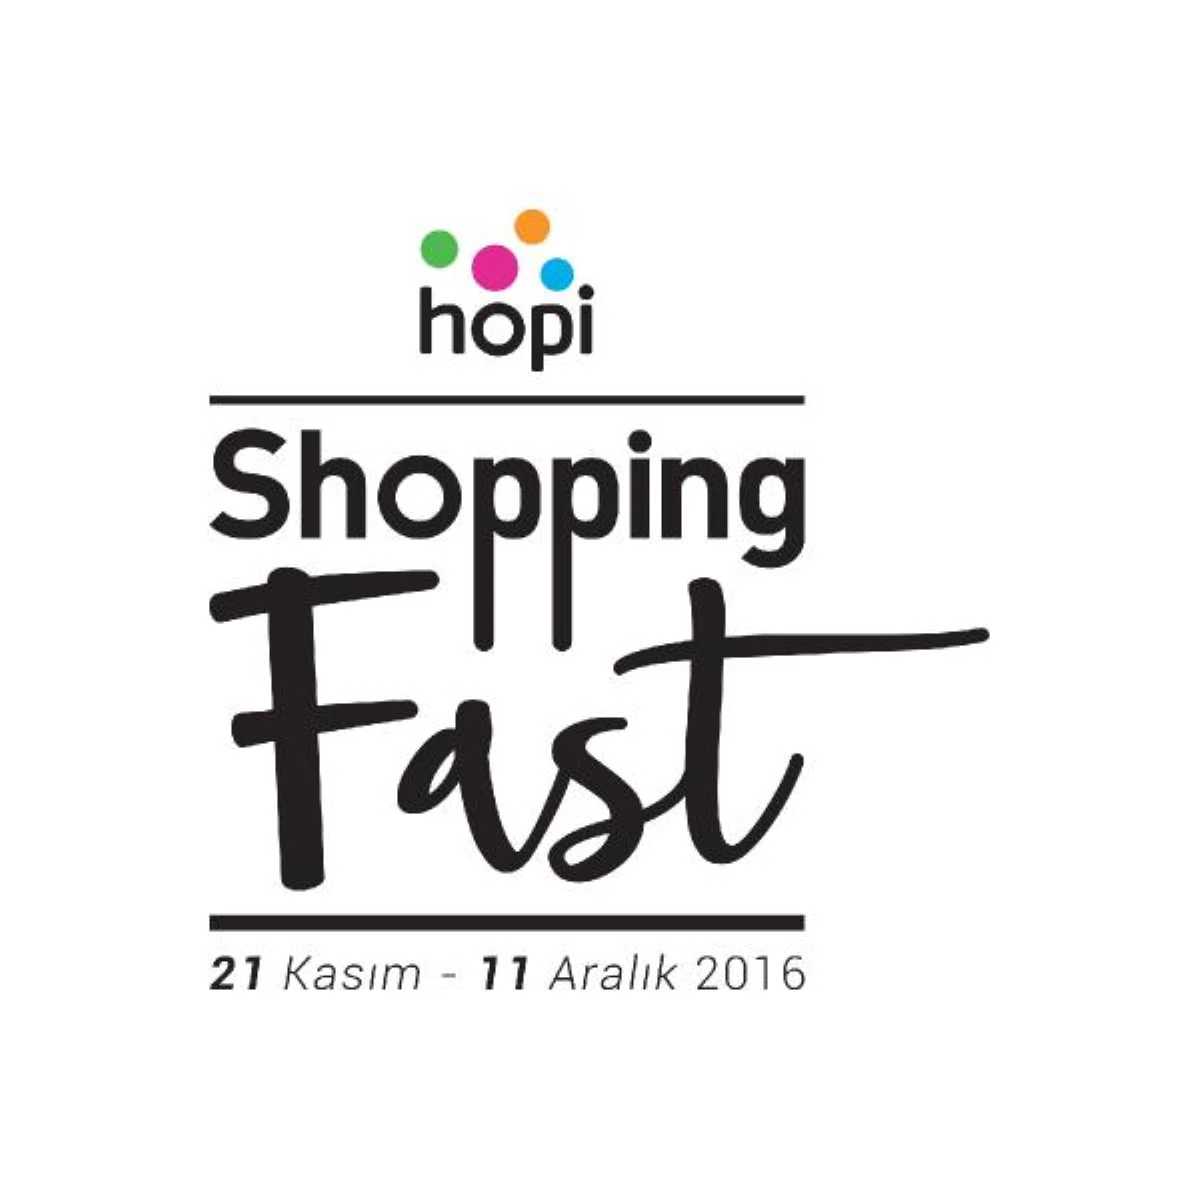 Fotoğraflı Bülten Dağıtımı) Hopi\'den Bir İlk: Instagram\'a Özel "Hopi Shopping Fast"